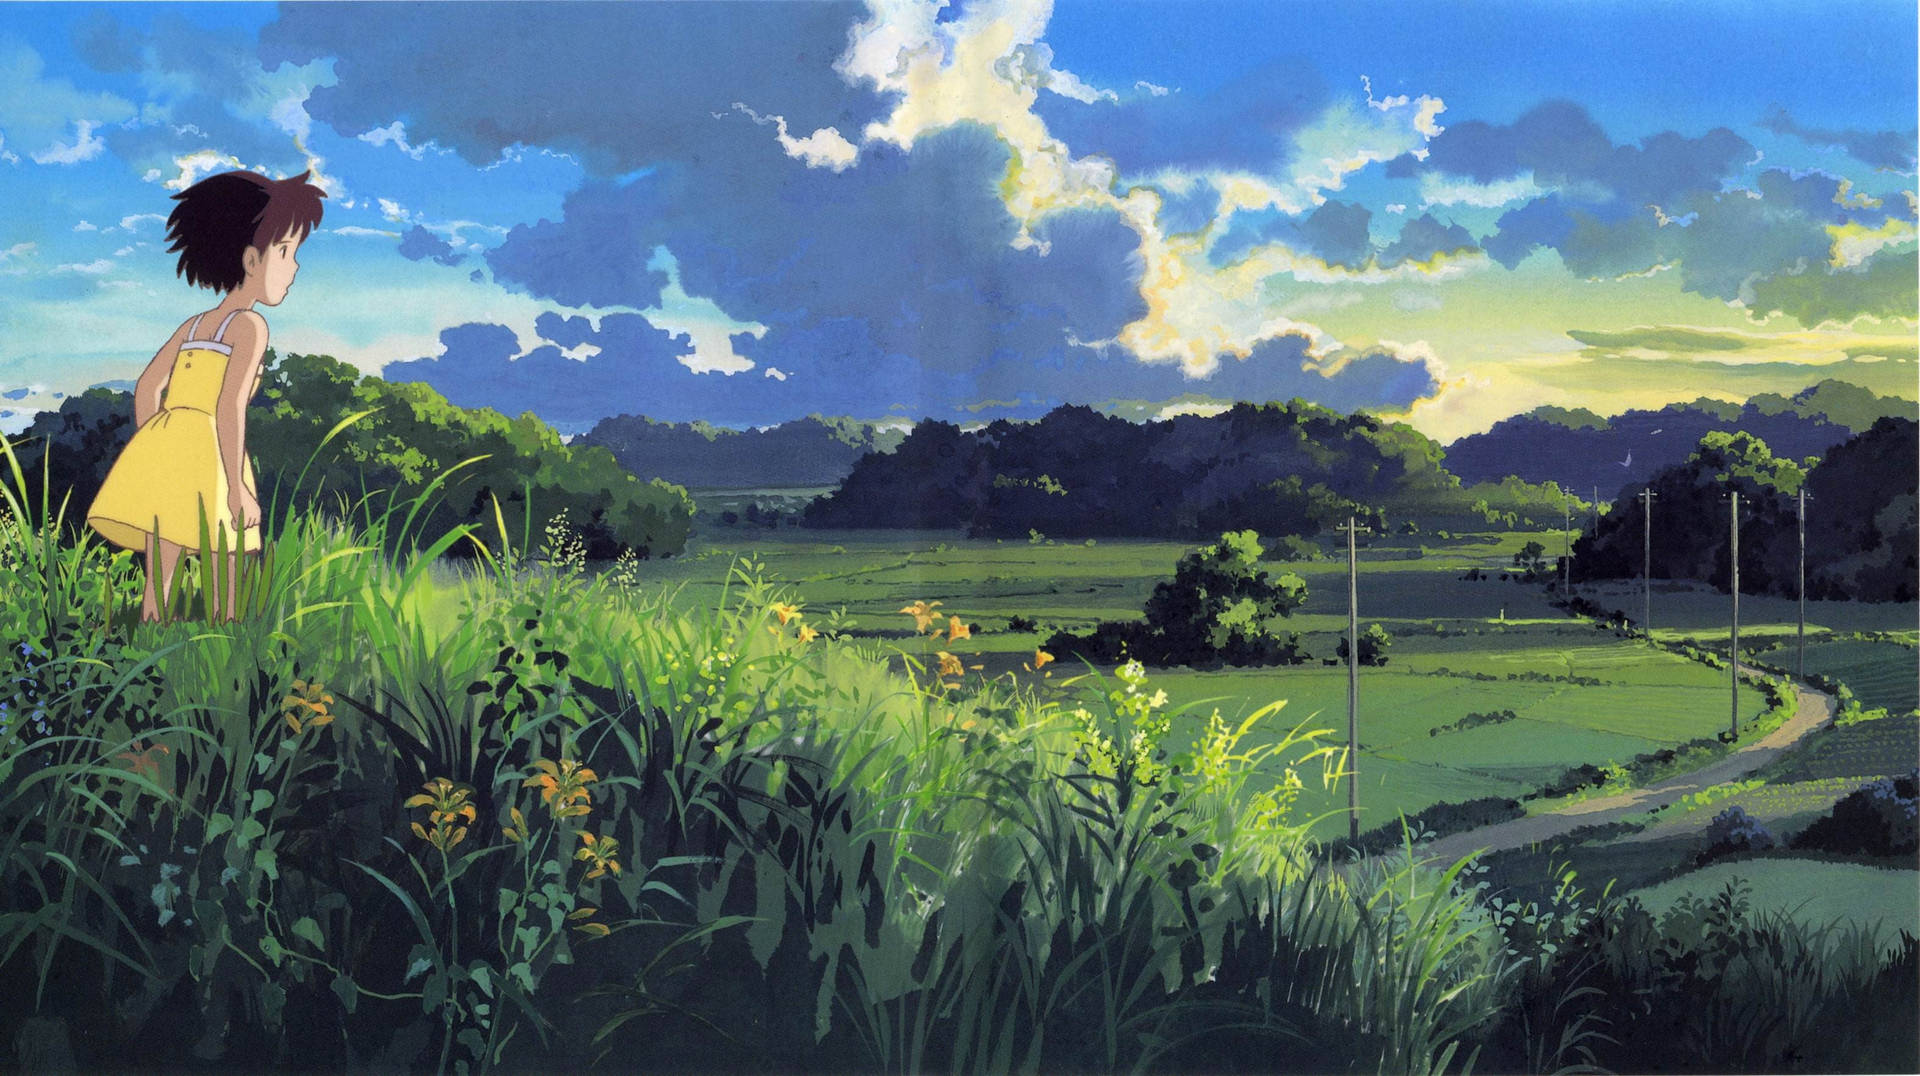 Studio Ghibli Scenery Girl In Field